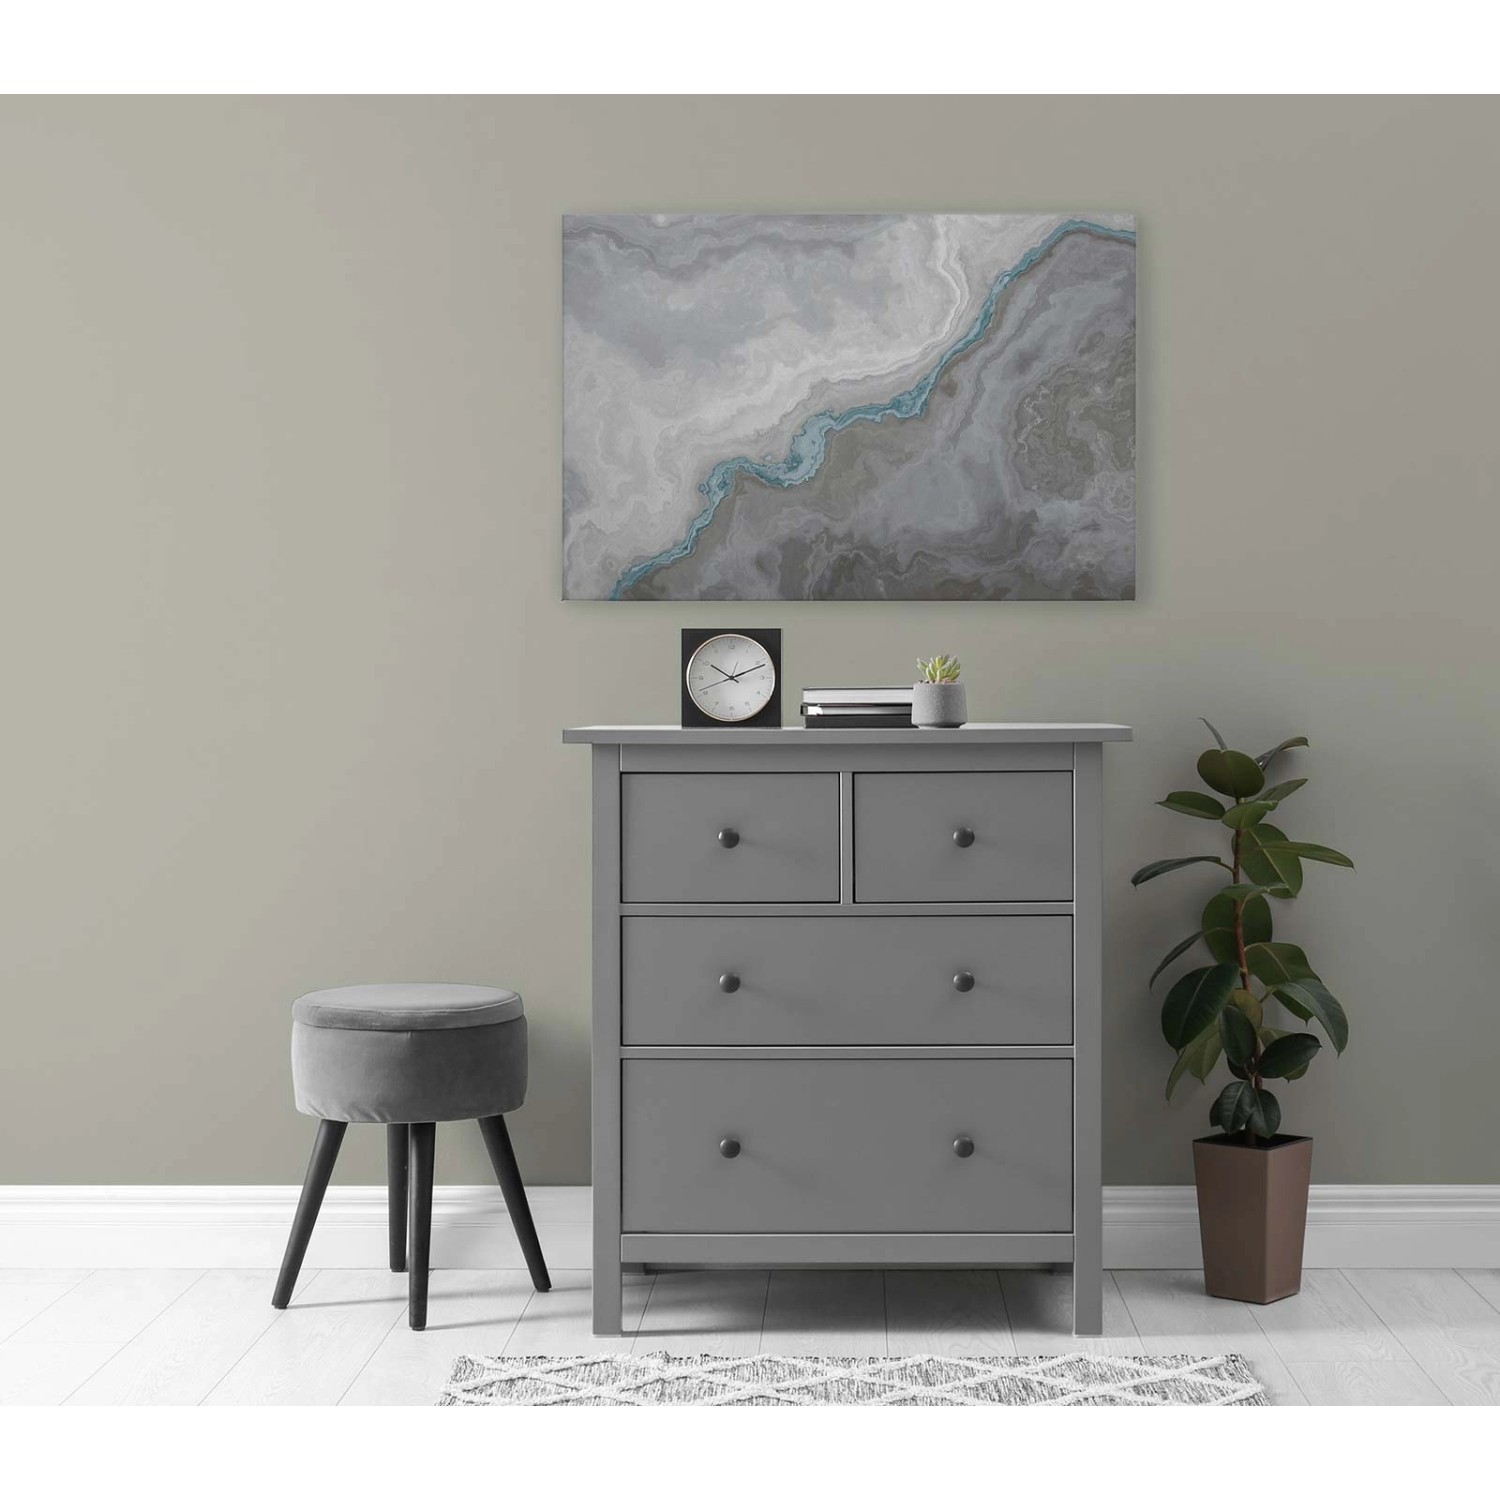 Bricoflor Marmor Bild Blau Grau Leinwandbild In Quarz Optik Für Badezimmer Und Schlafzimmer Deko Wandbild Elegant 90 X 6